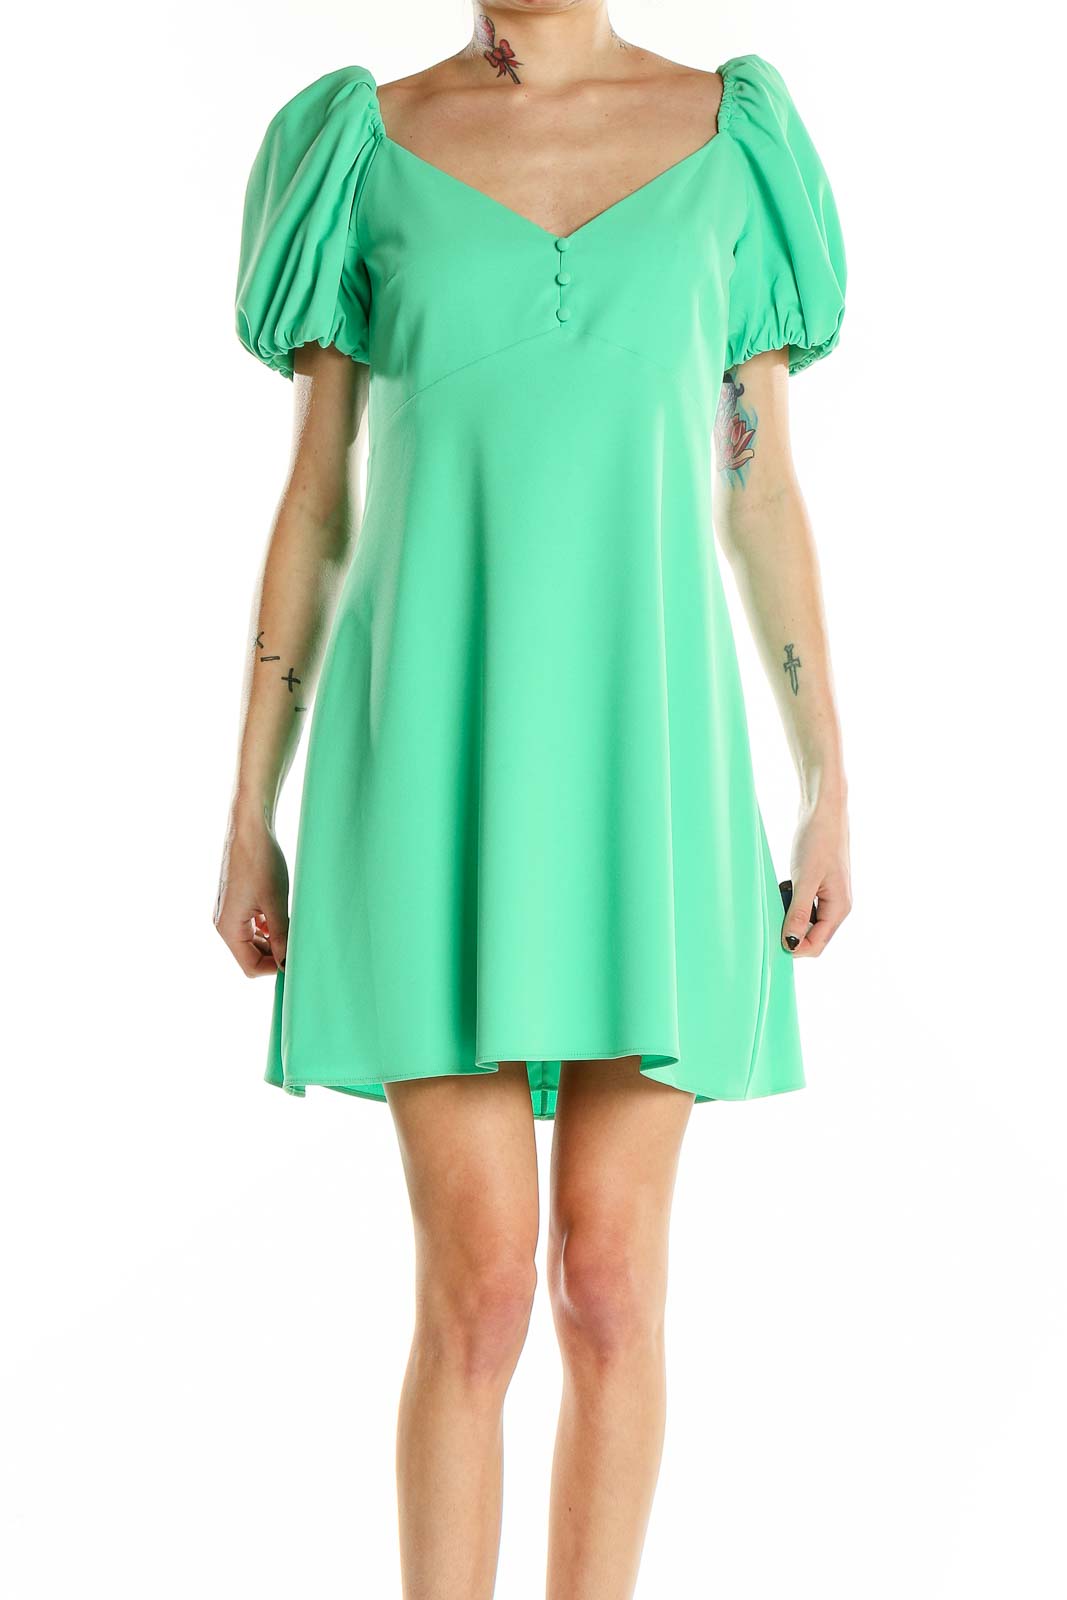 Green Babydoll Dress Front